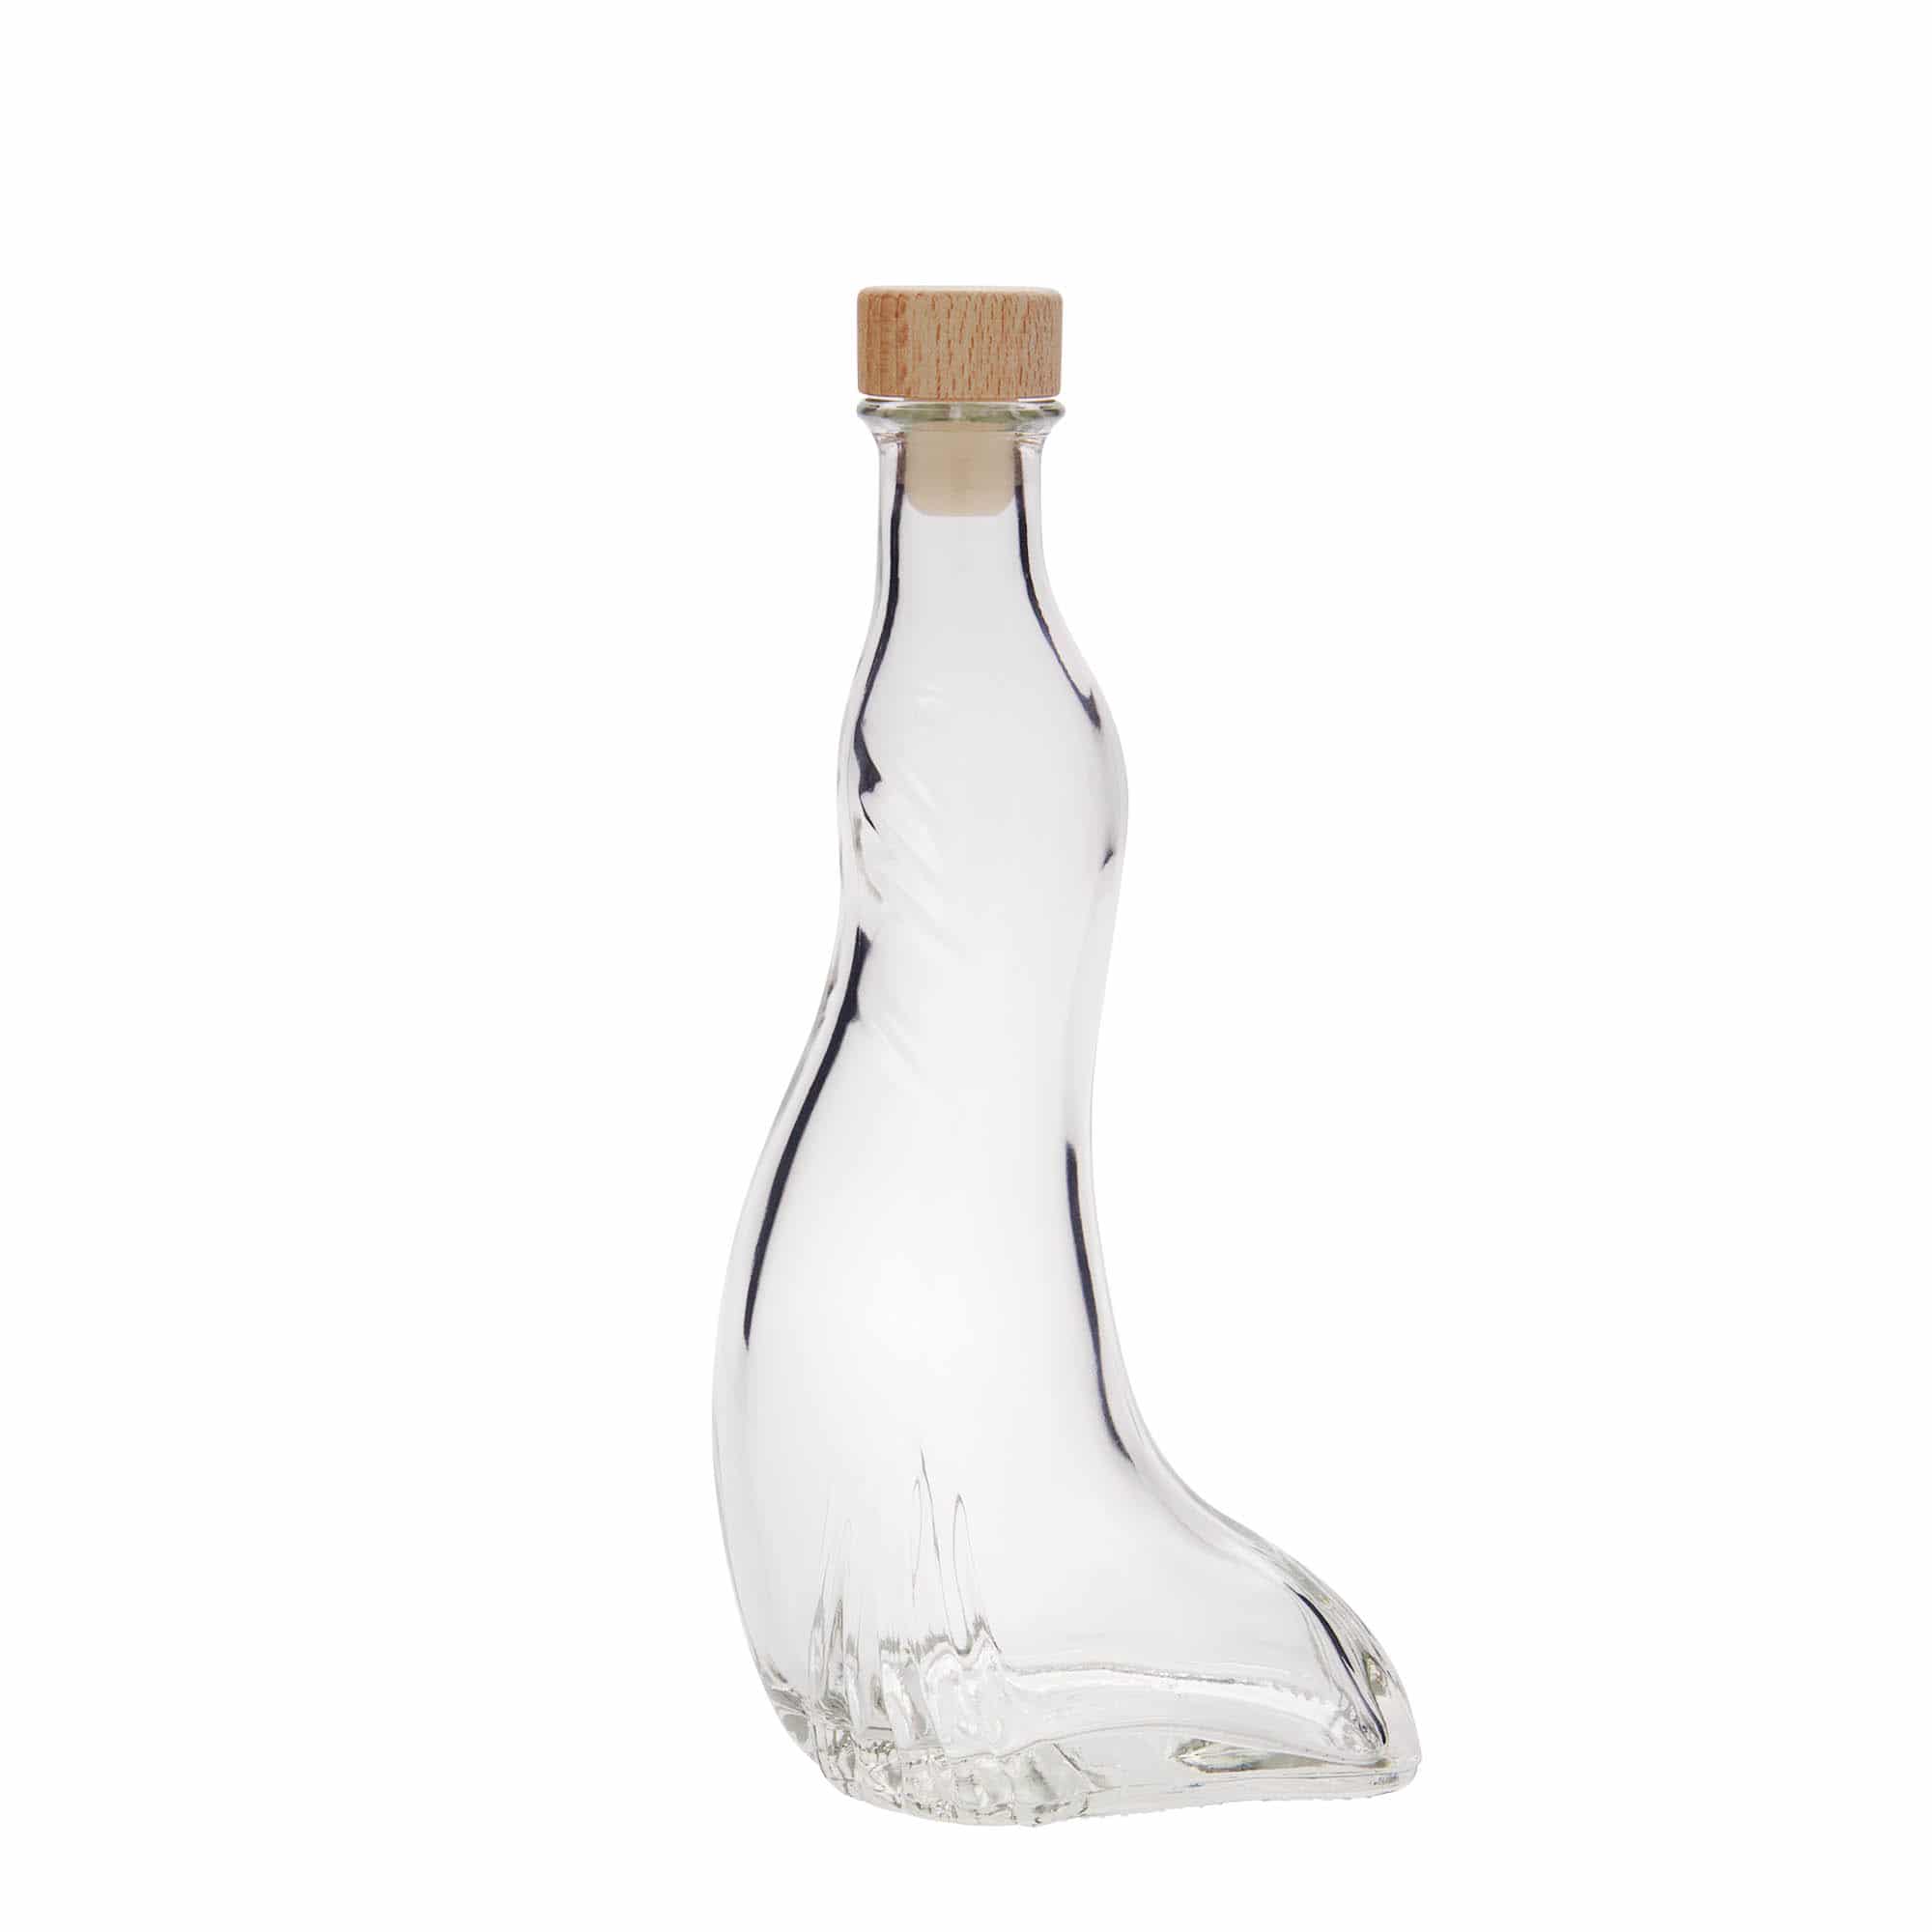 200 ml glass bottle 'Seal', closure: cork